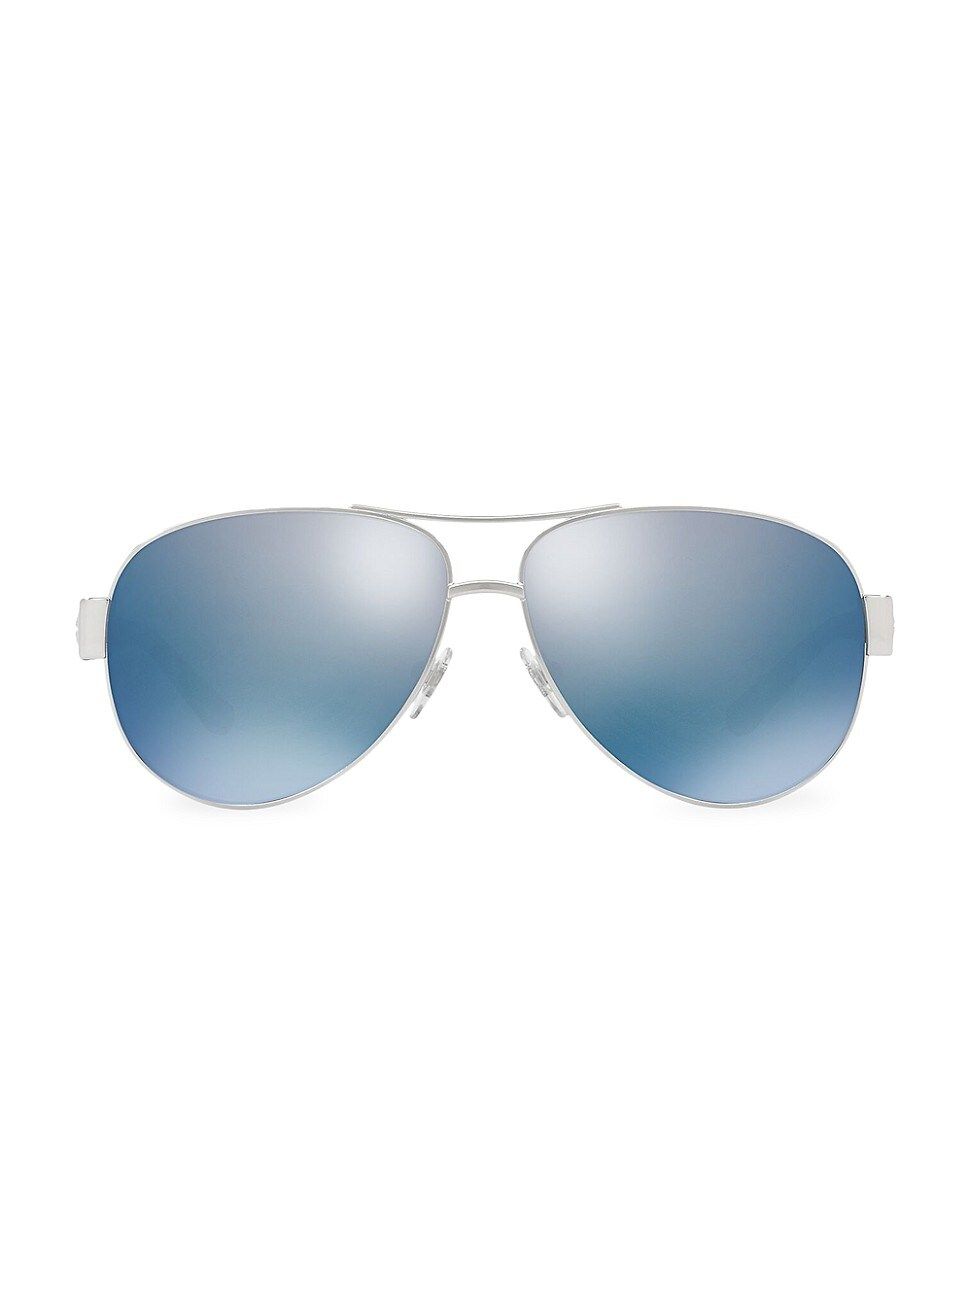 Tory Burch Women's 60MM Aviator Sunglasses - Blue | Saks Fifth Avenue